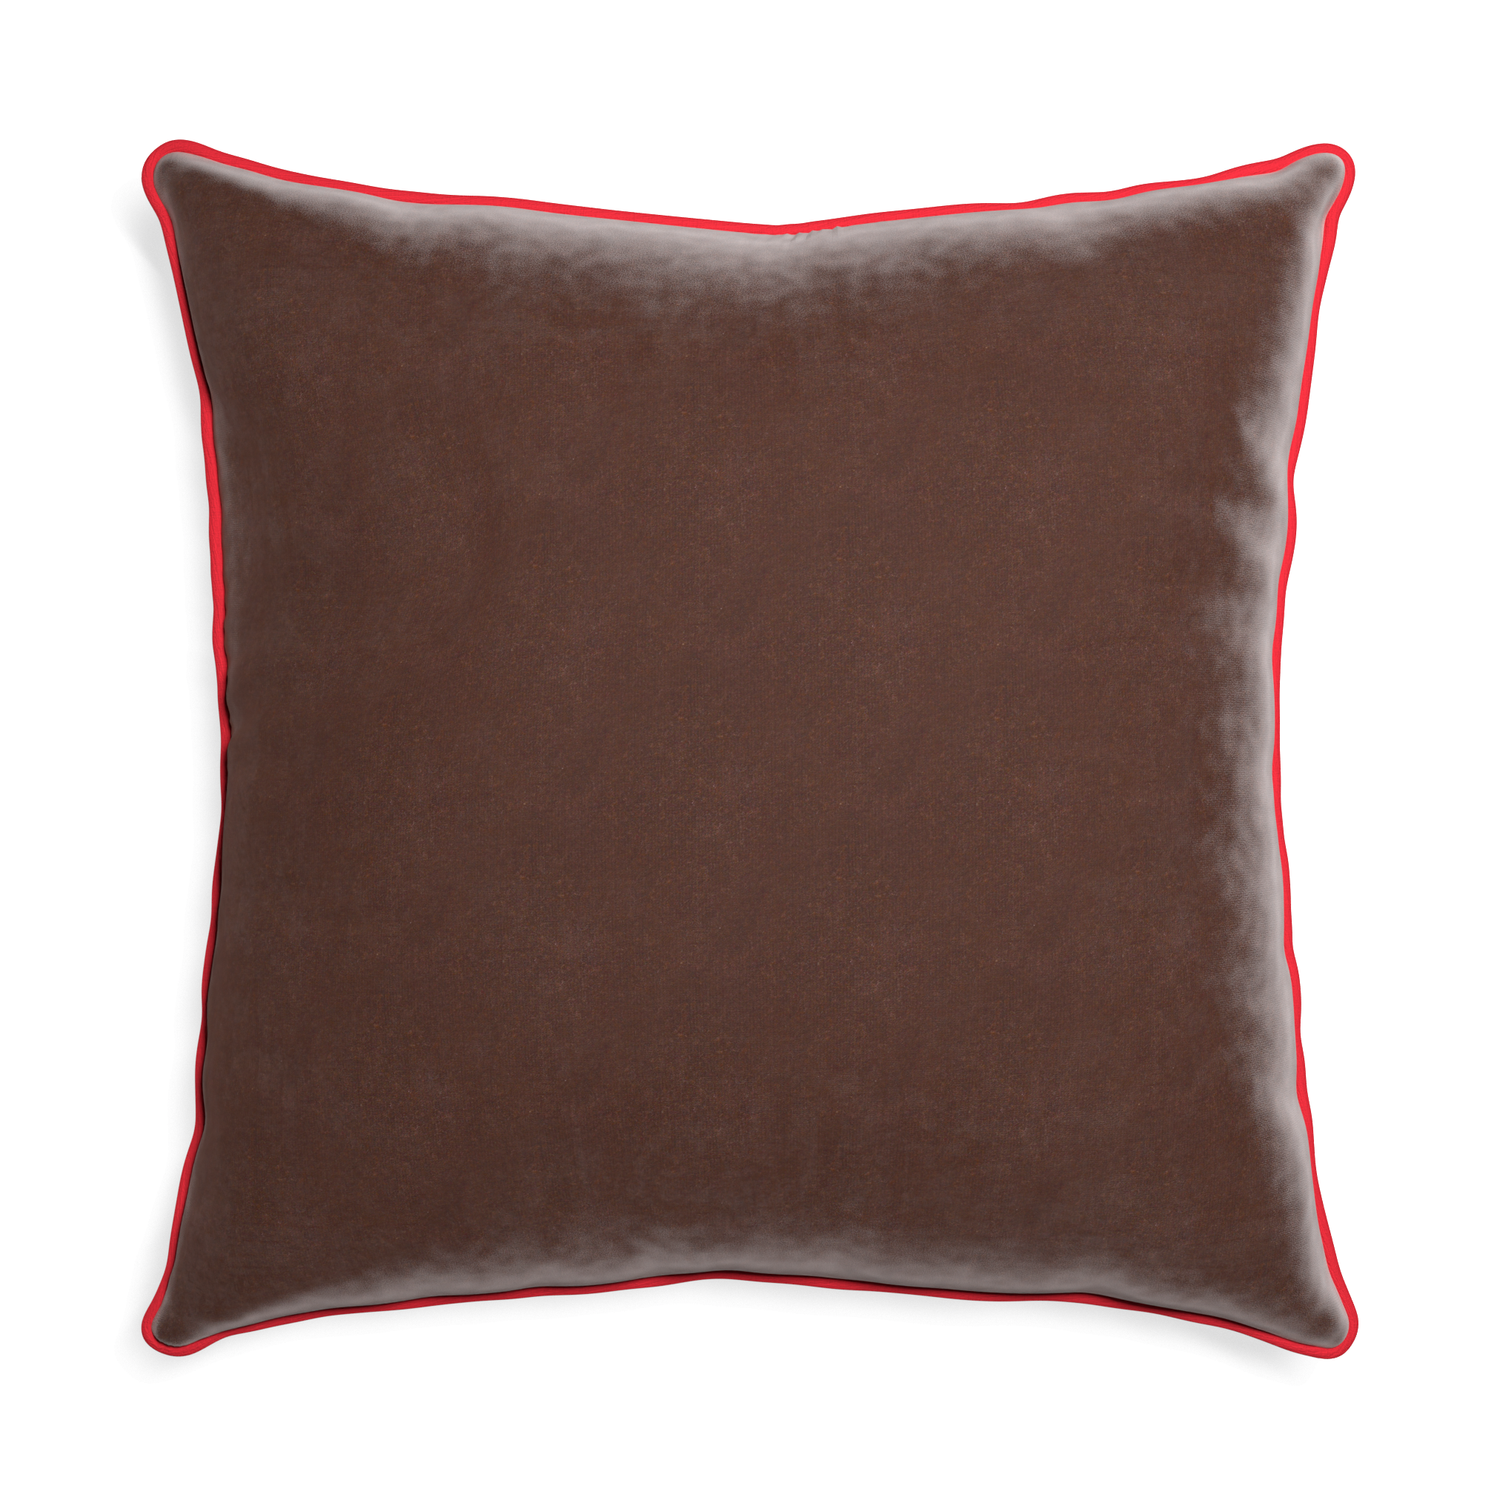 Euro-sham walnut velvet custom pillow with cherry piping on white background